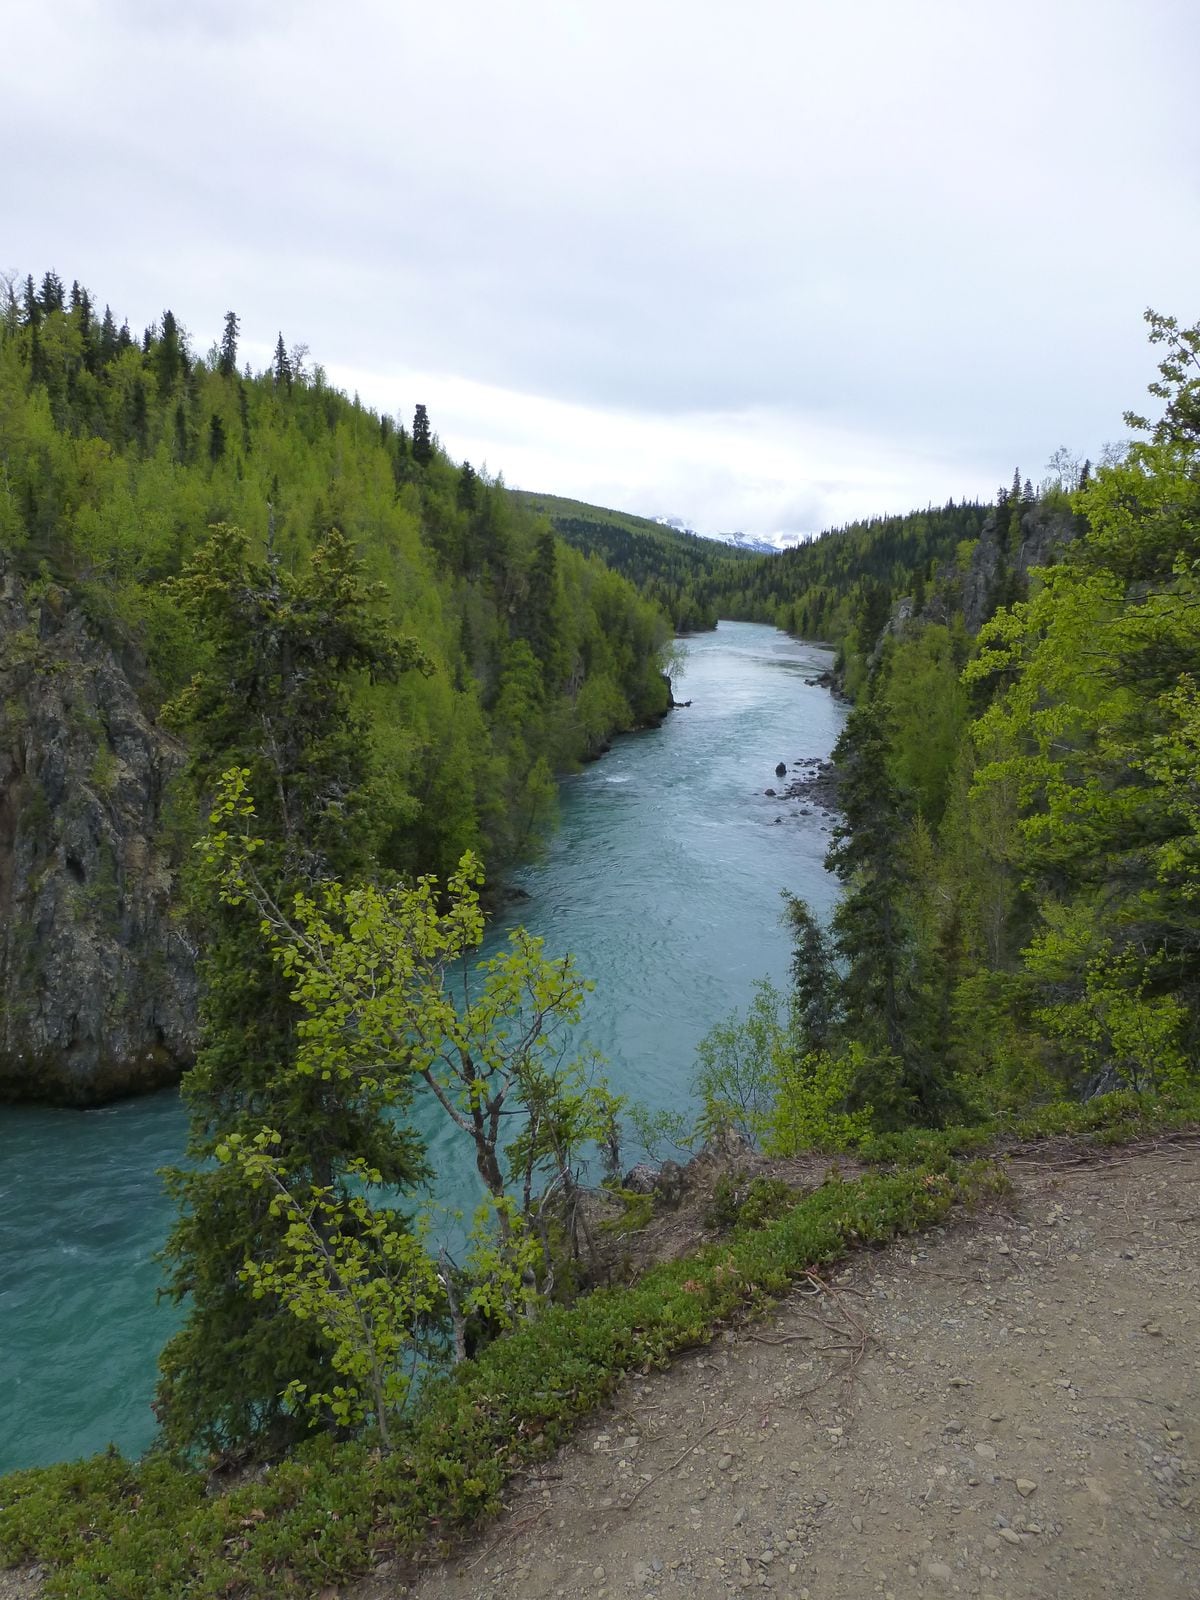 Easy hike offers Kenai River views Anchorage Daily News